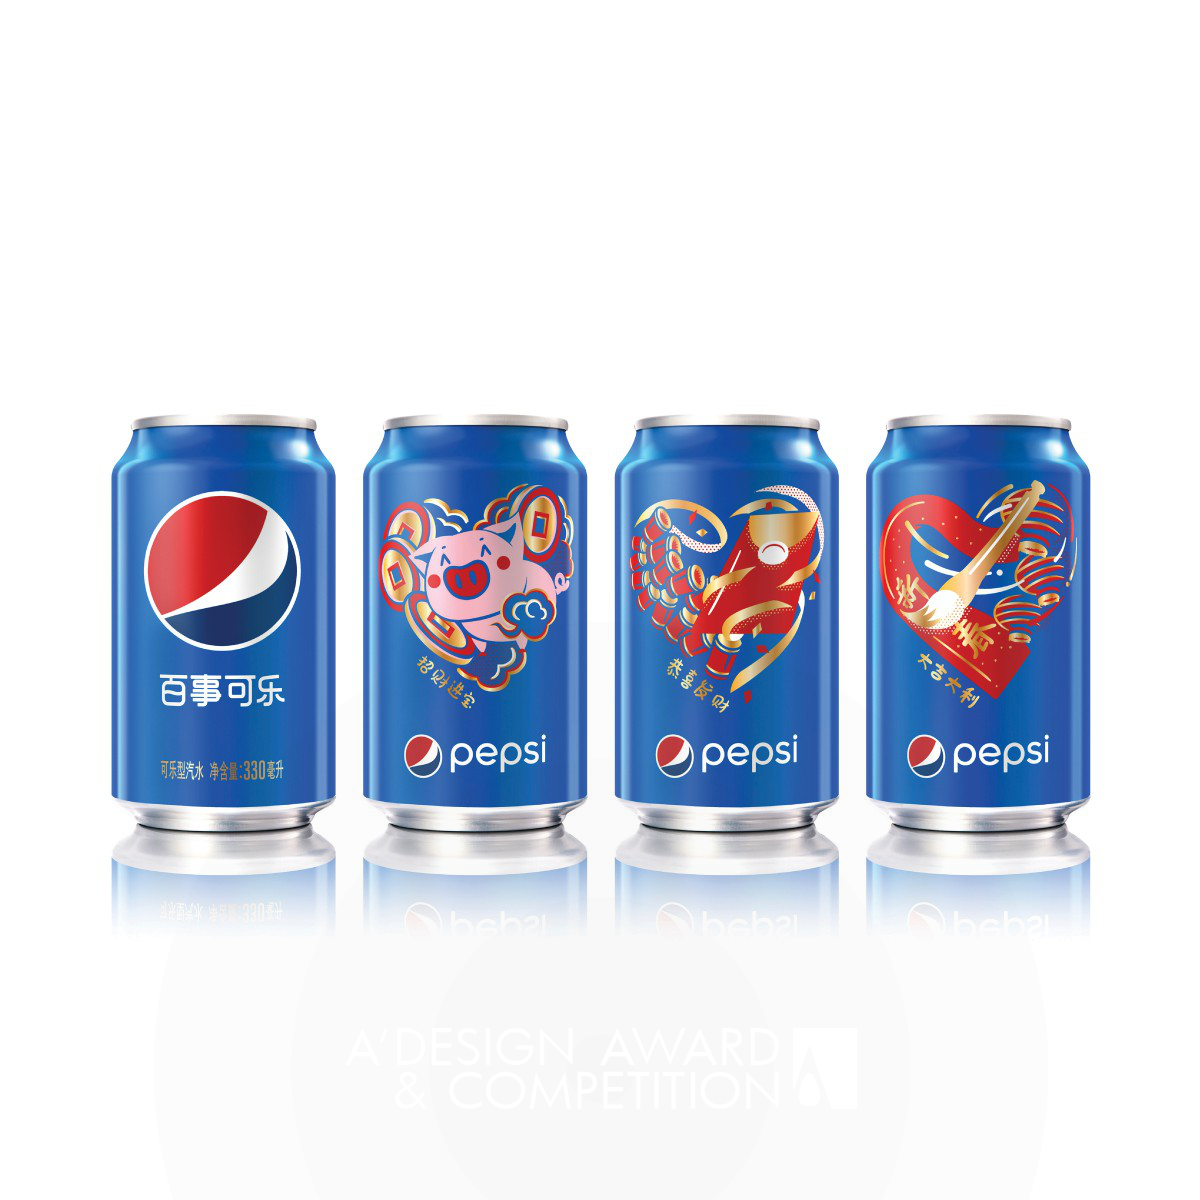 Pepsi Year of the Pig Ltd Ed